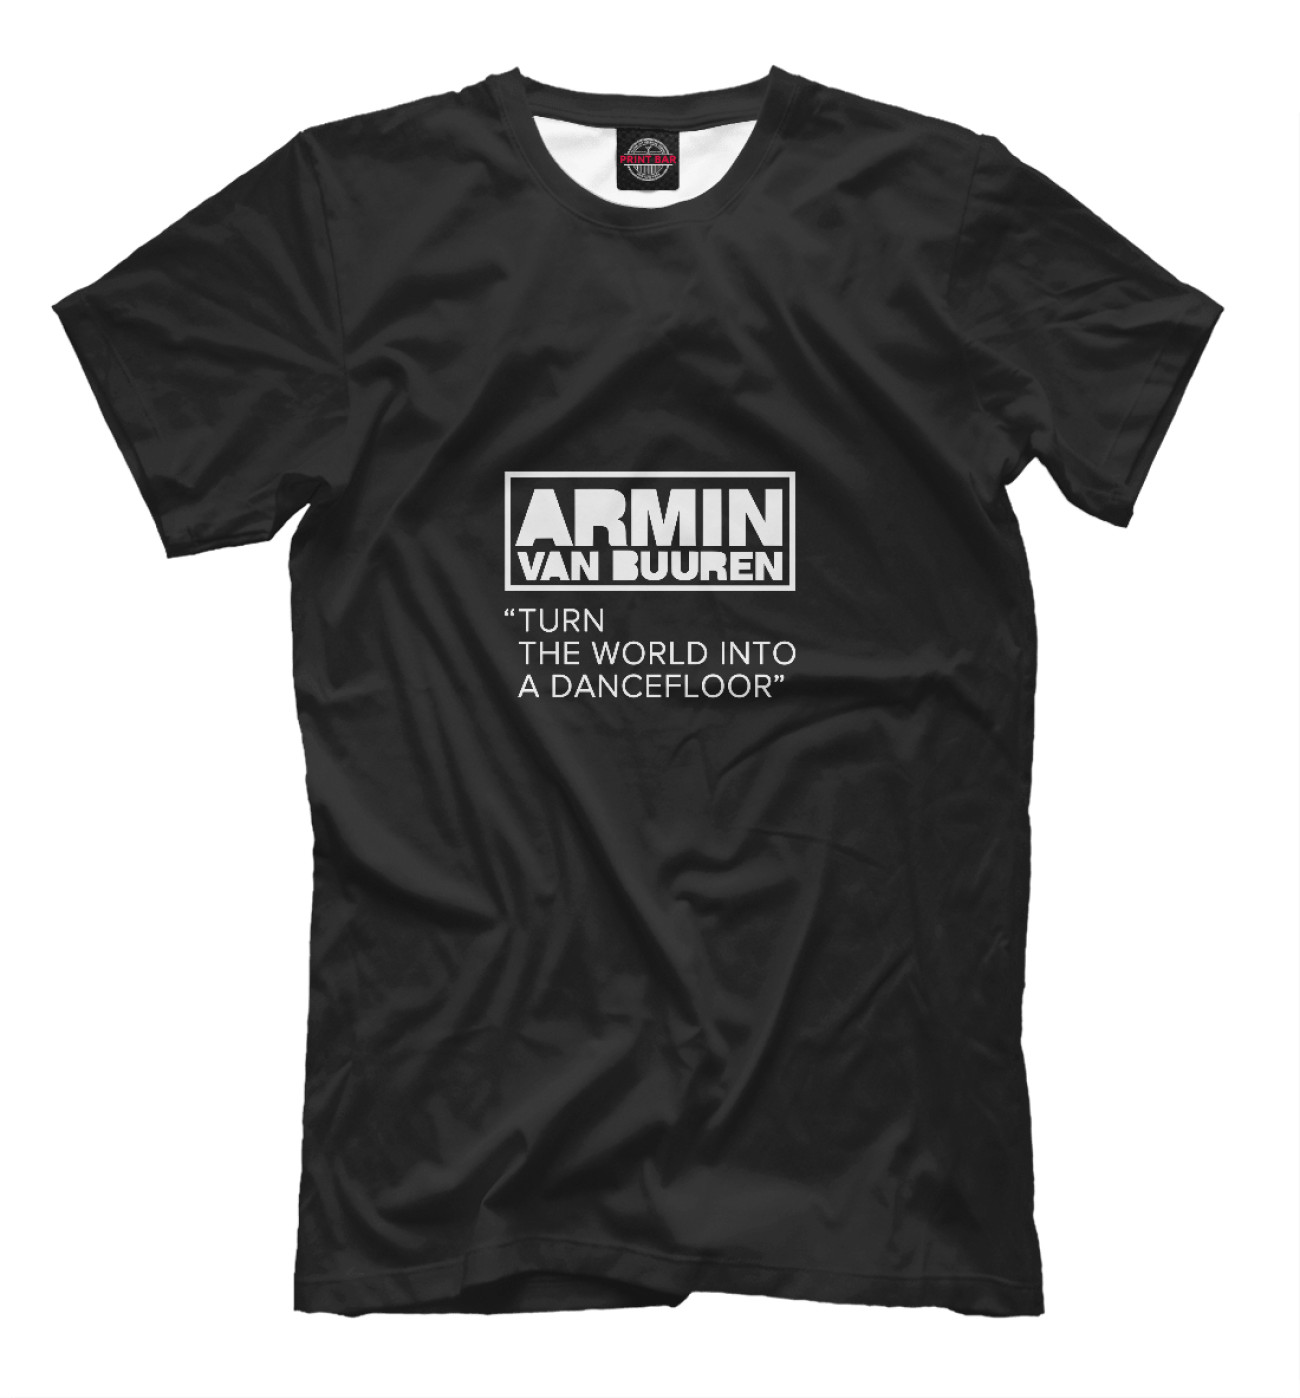 Мужская Футболка Armin Van Buuren ASOT1000, артикул: MZK-503095-fut-2